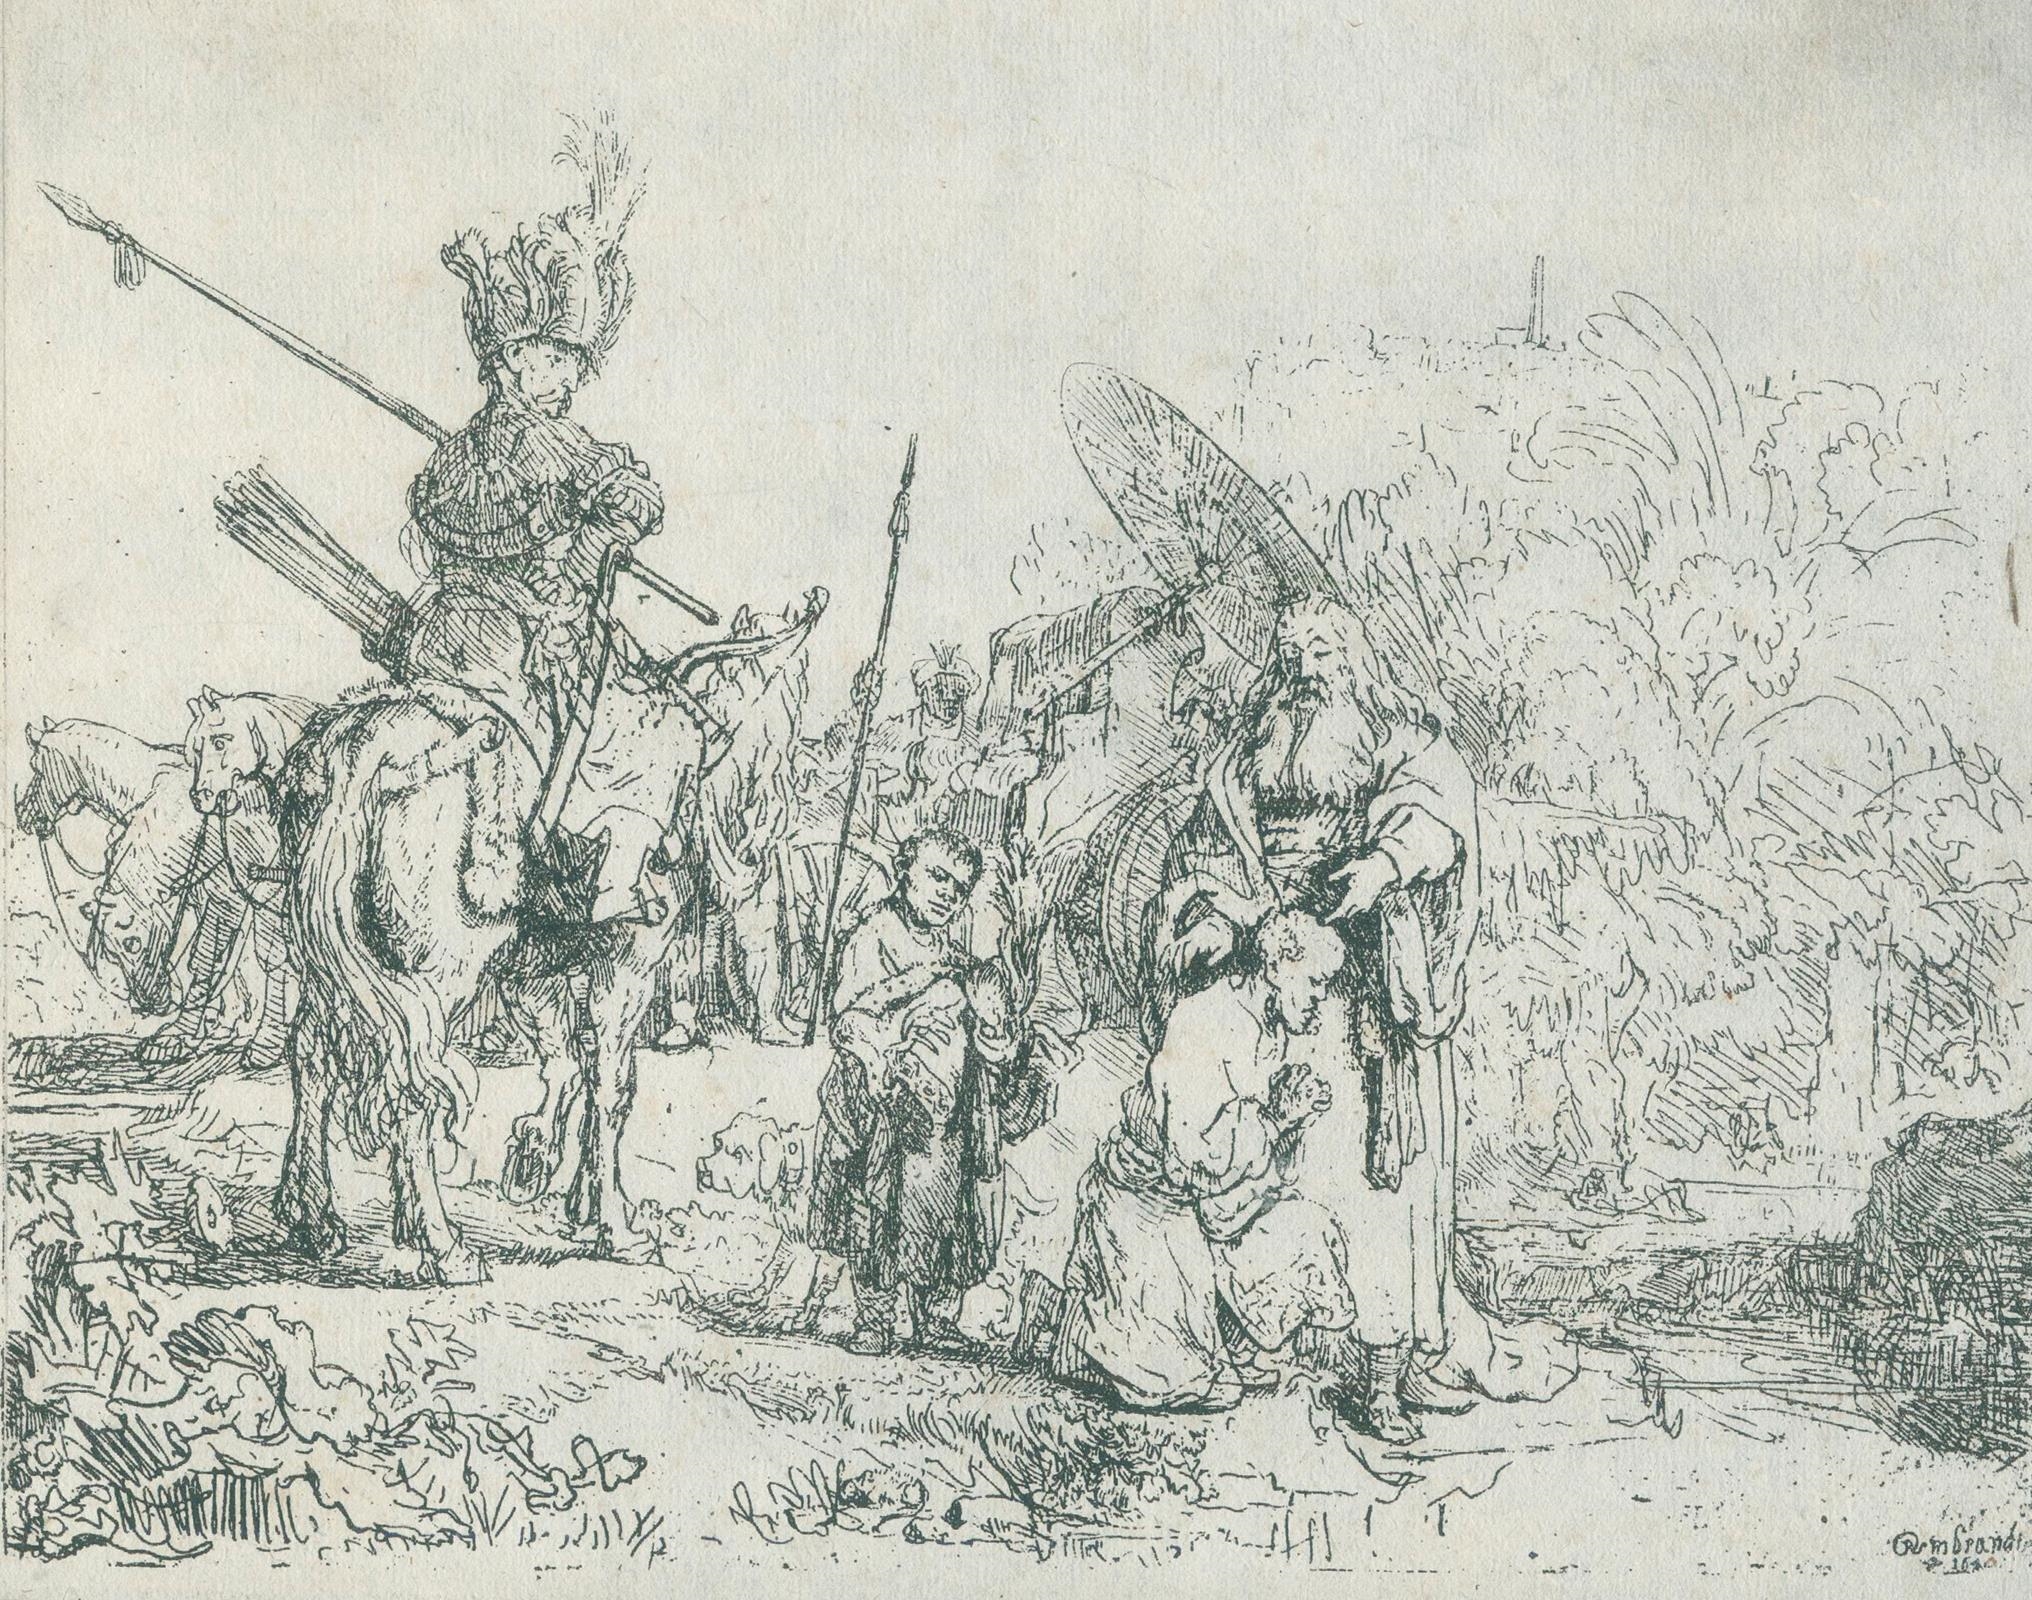 Die Taufe des Kämmerers by Rembrandt van Rijn, 1641